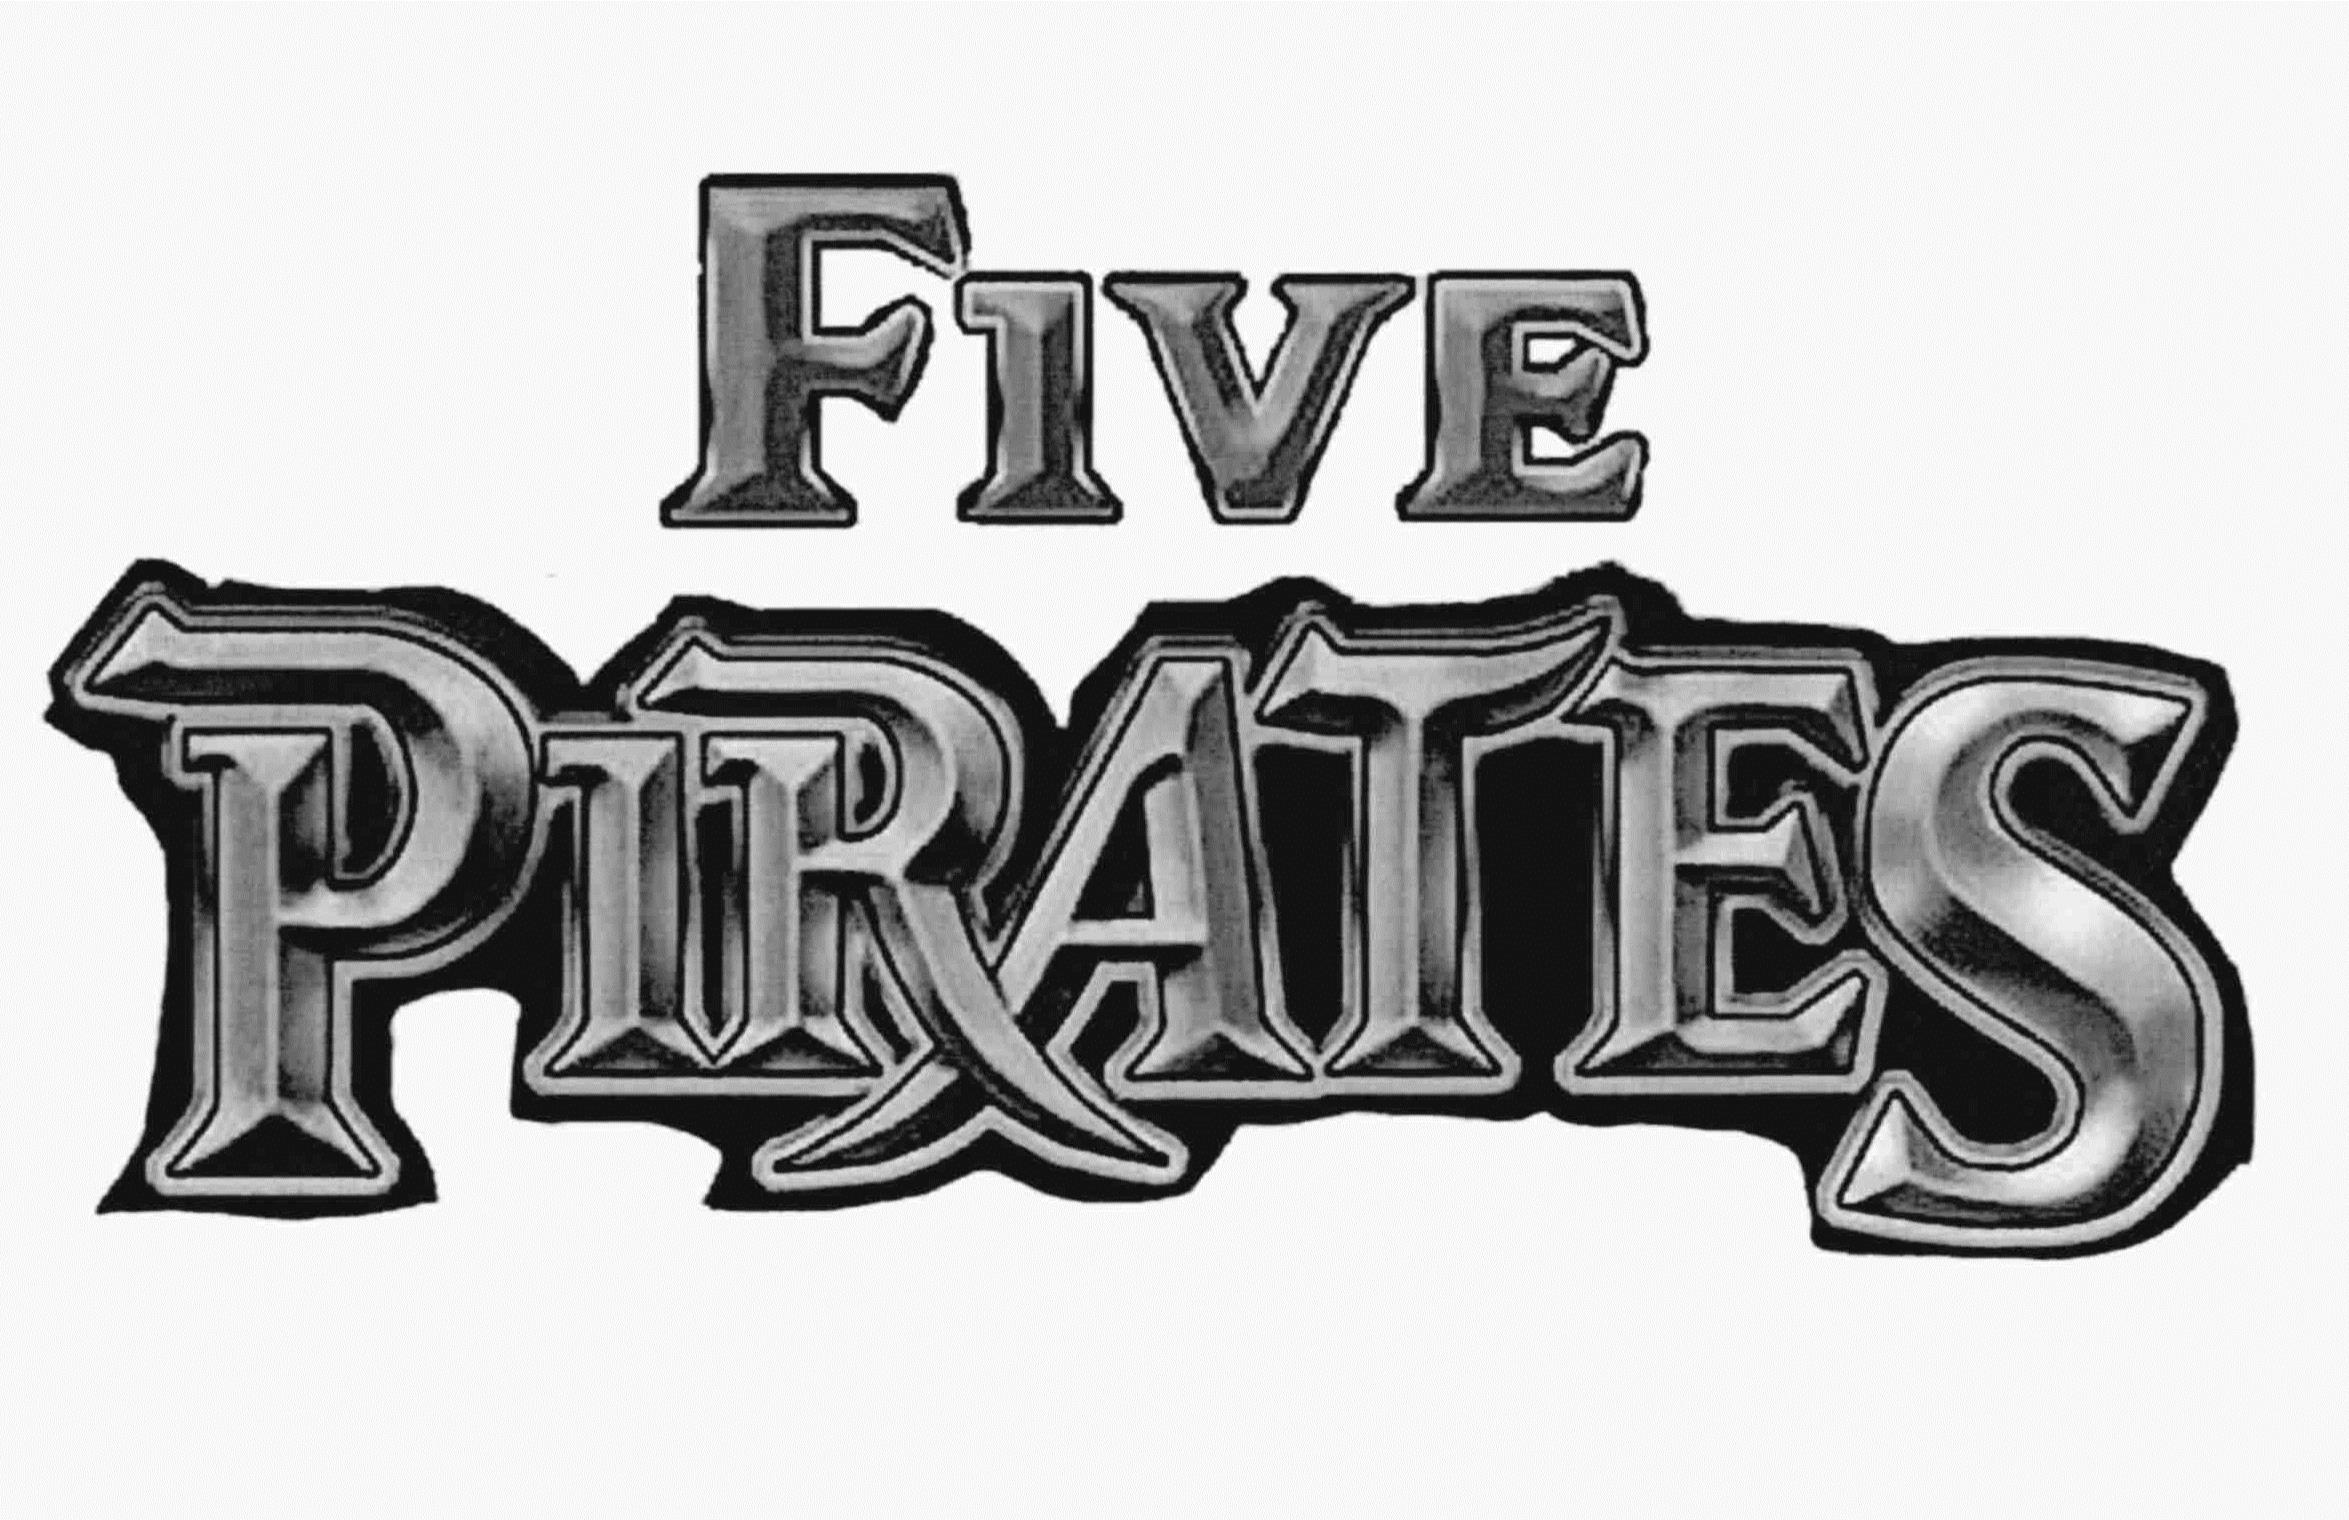  FIVE PIRATES